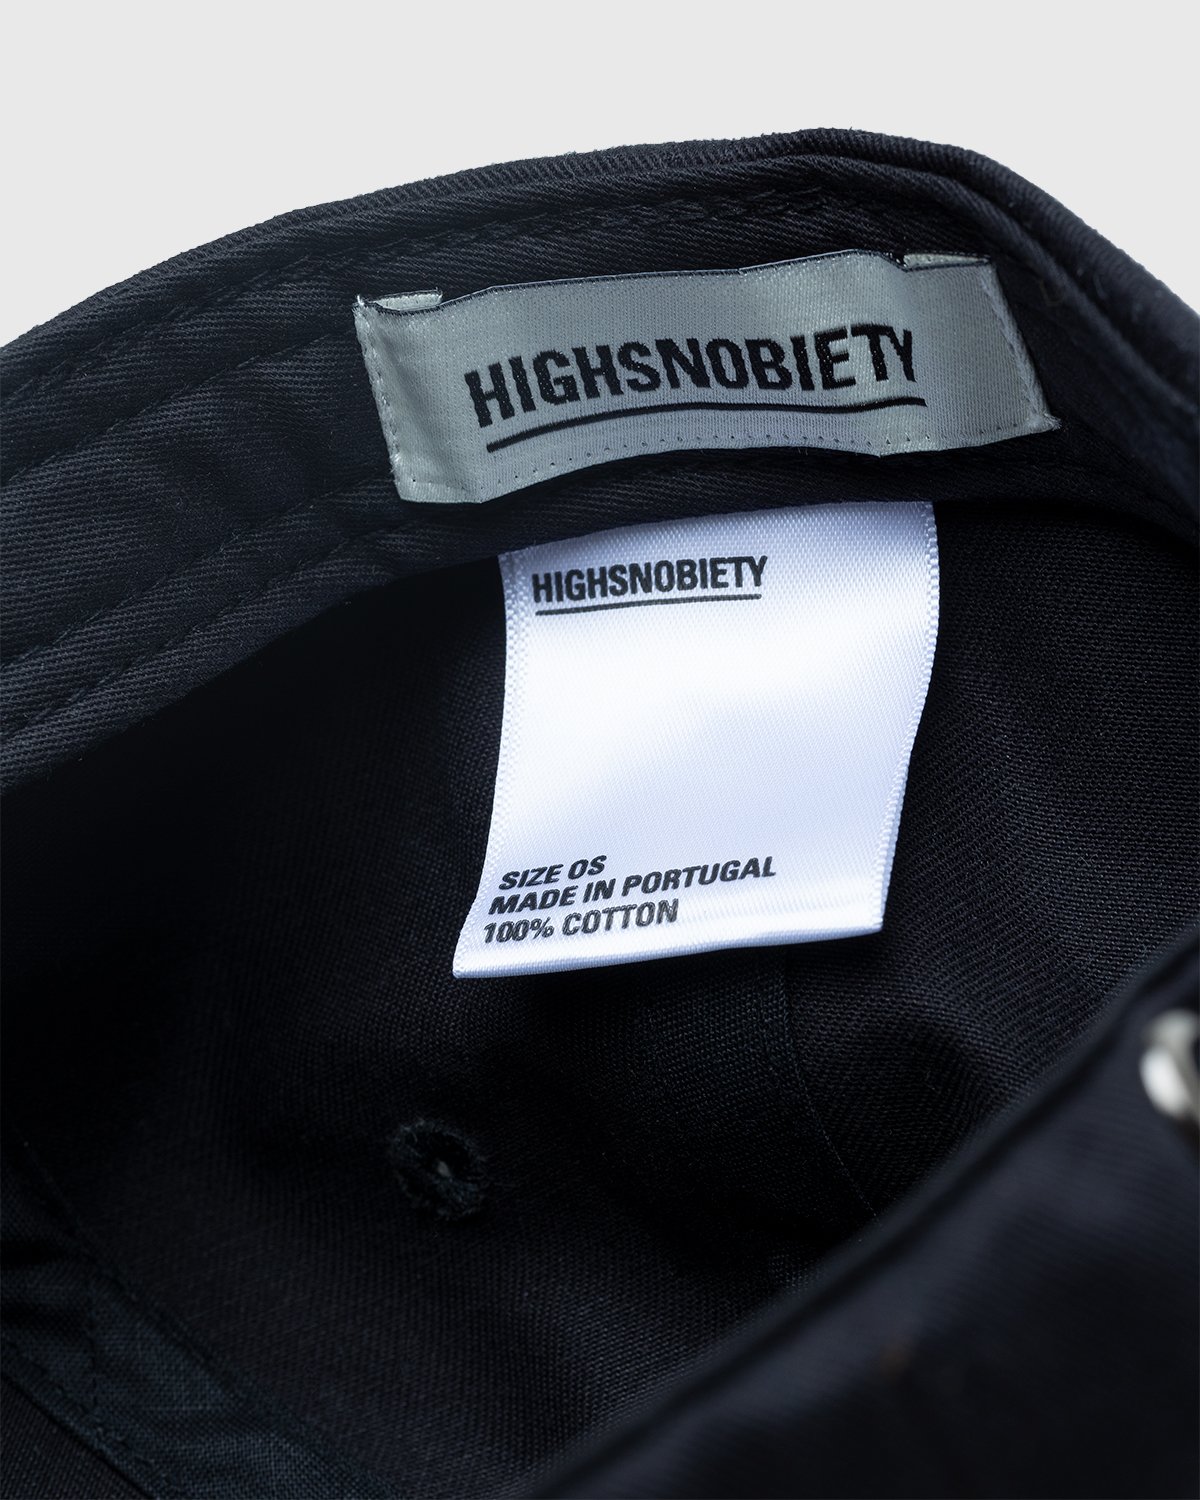 Highsnobiety - Baseball Cap Black - Accessories - Black - Image 6